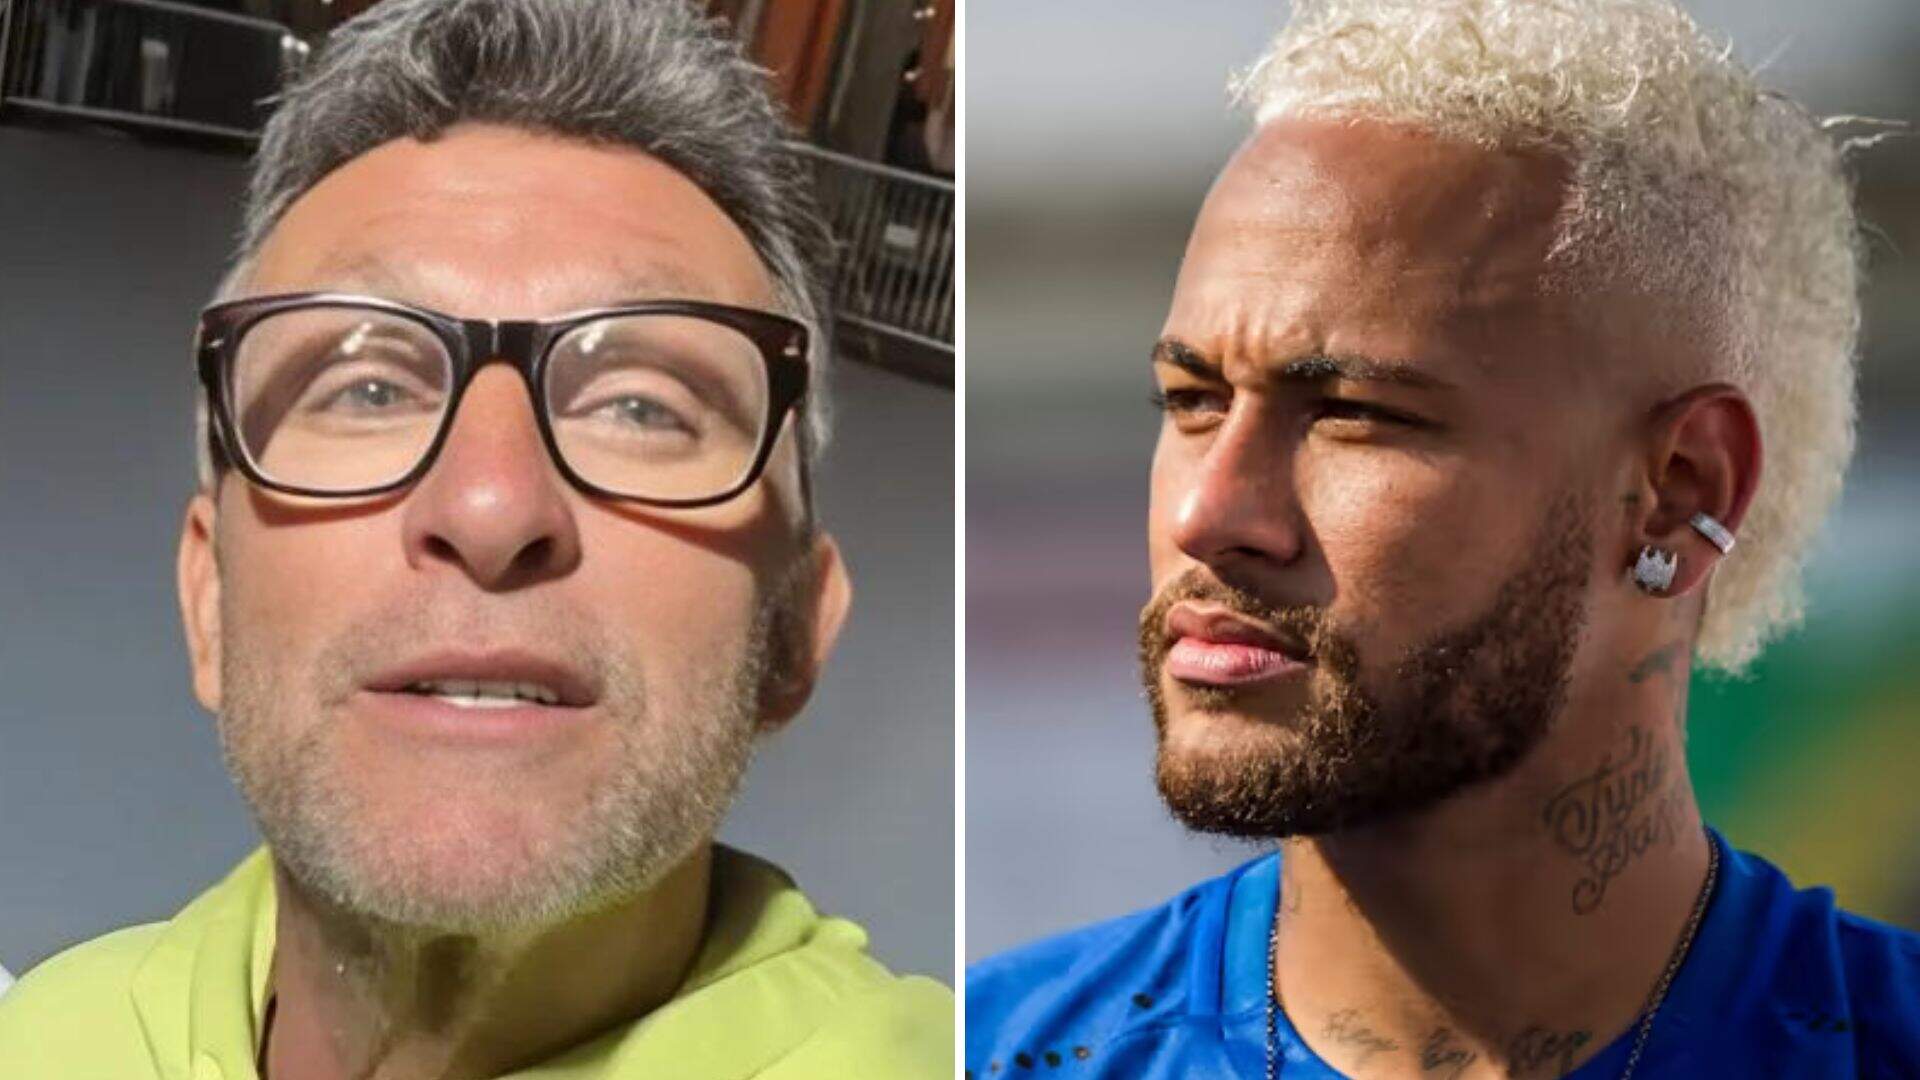 Neto critica cruzeiro do Neymar e dispara: “Cambada de puxa-saco” - Metropolitana FM